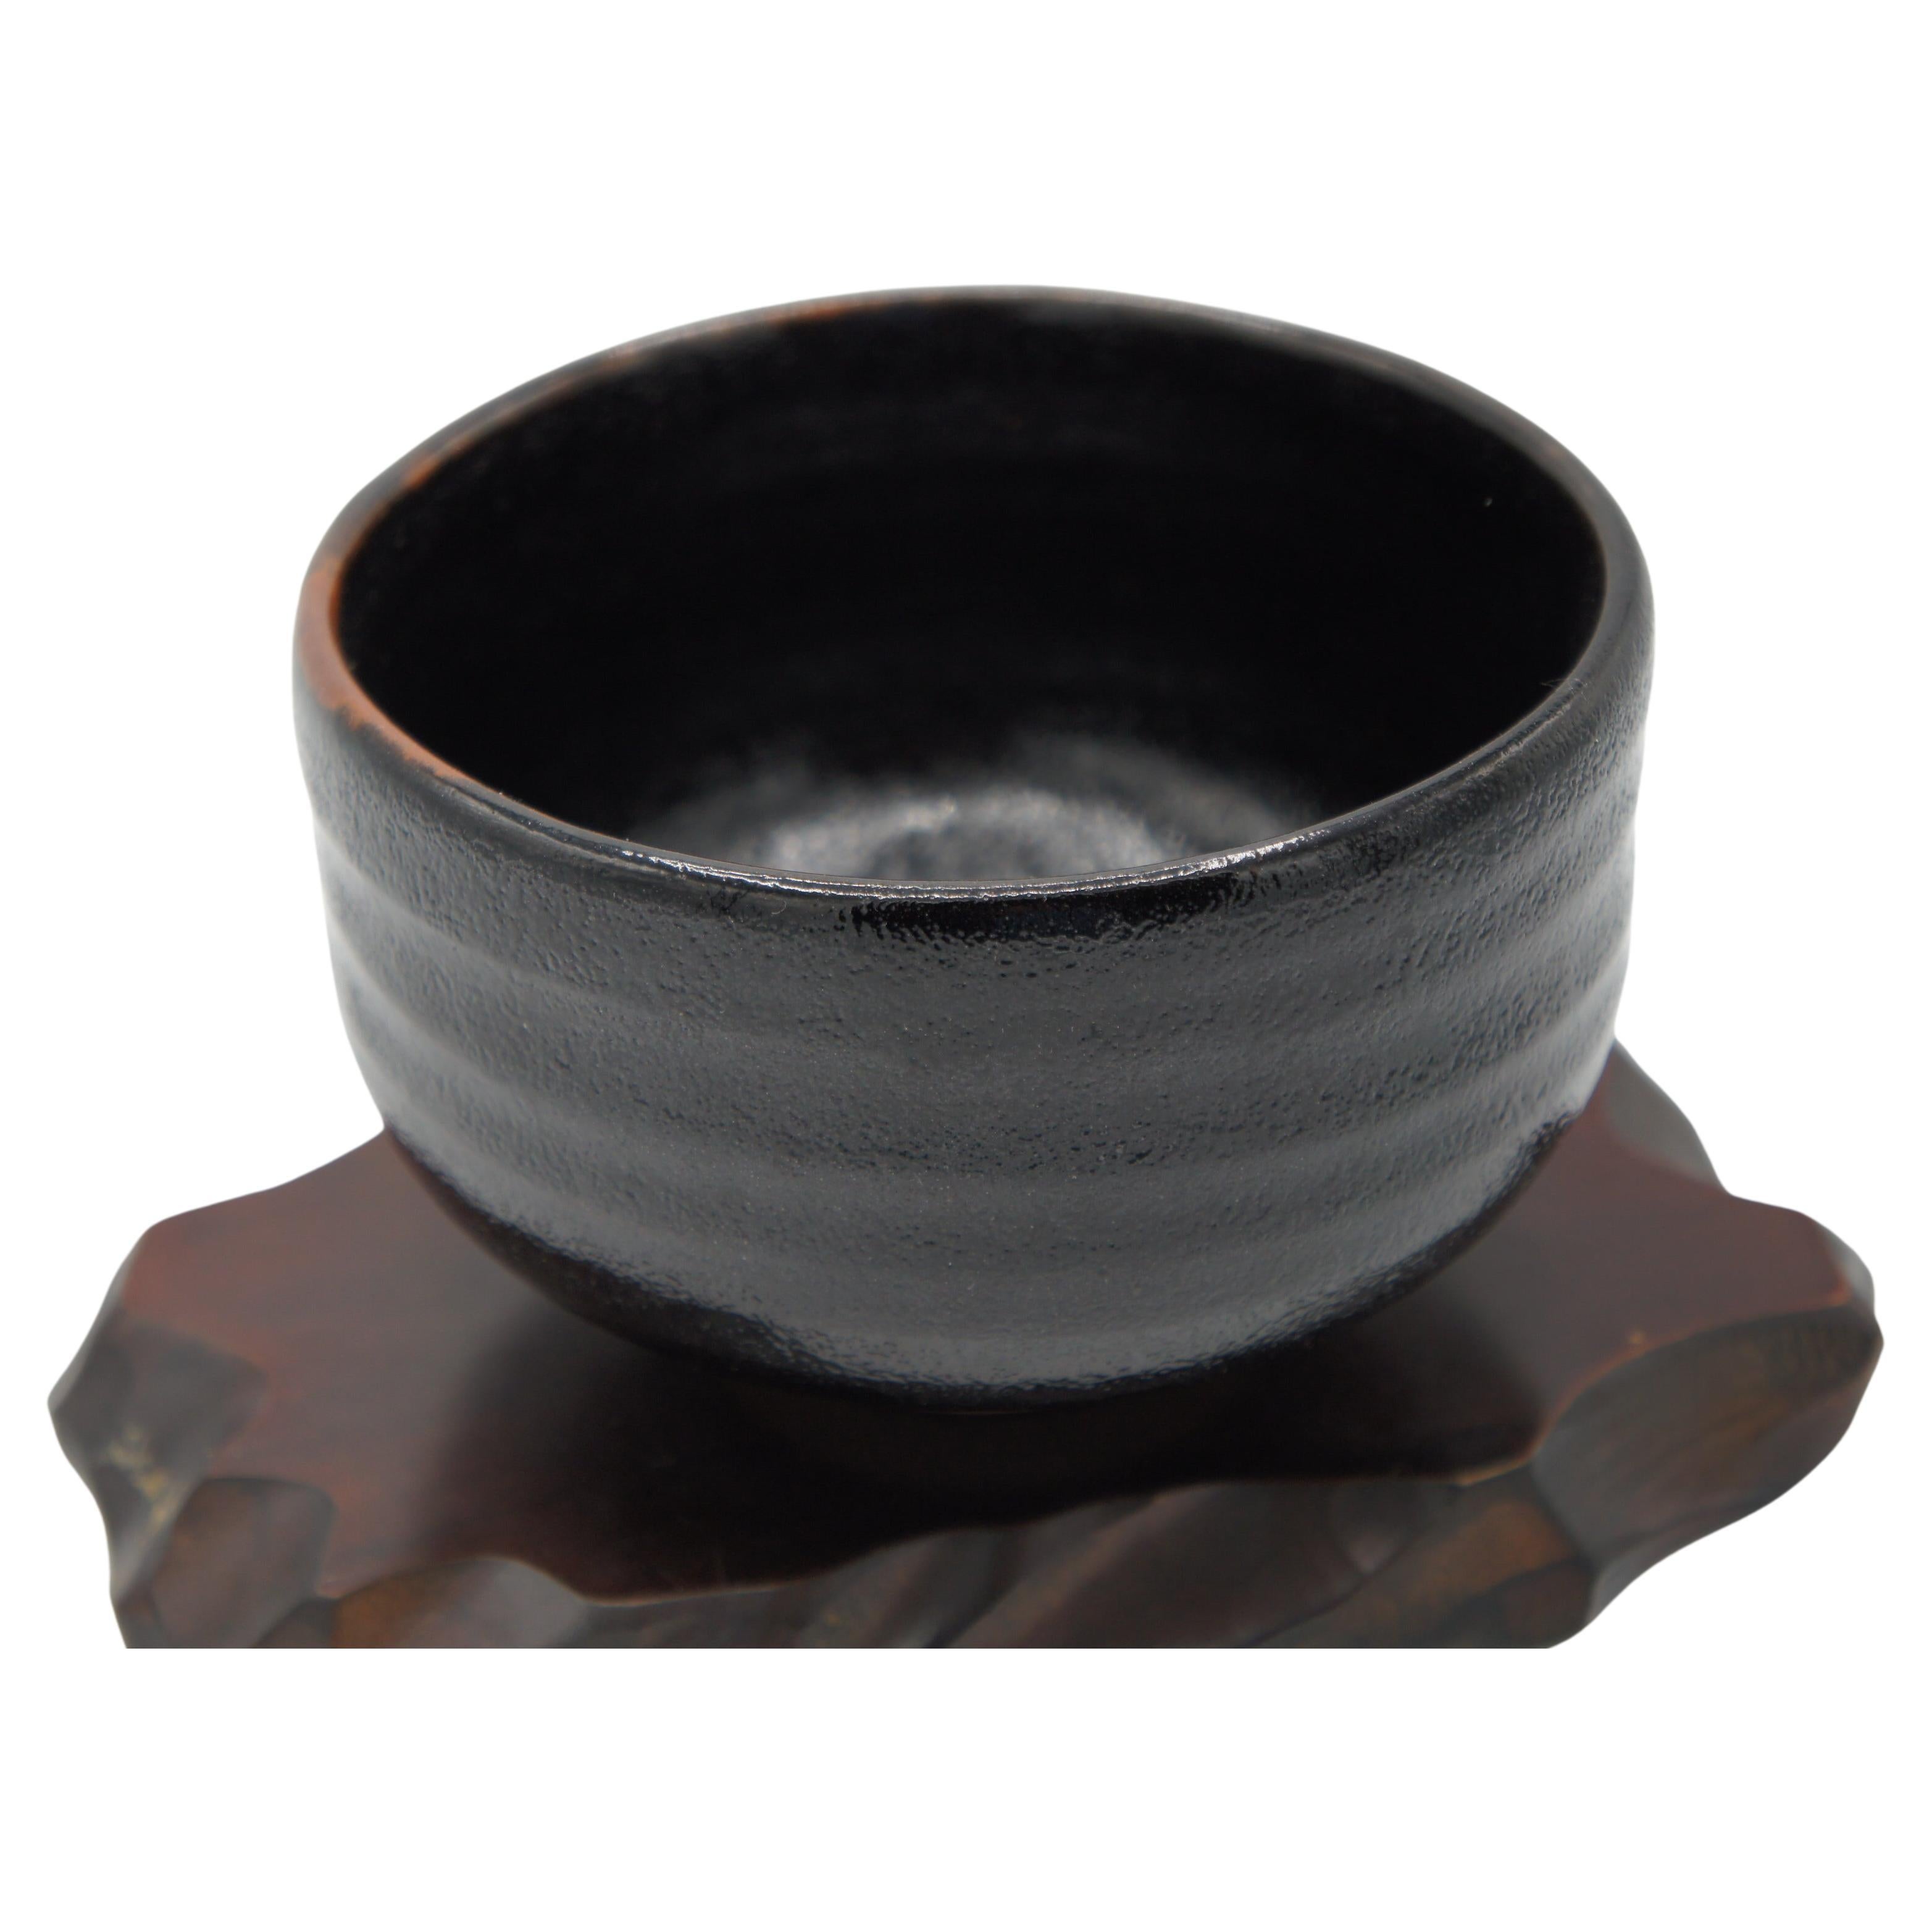 Japanese Antique Matcha Bowl Black for Tea Ceremony 1970s Showa